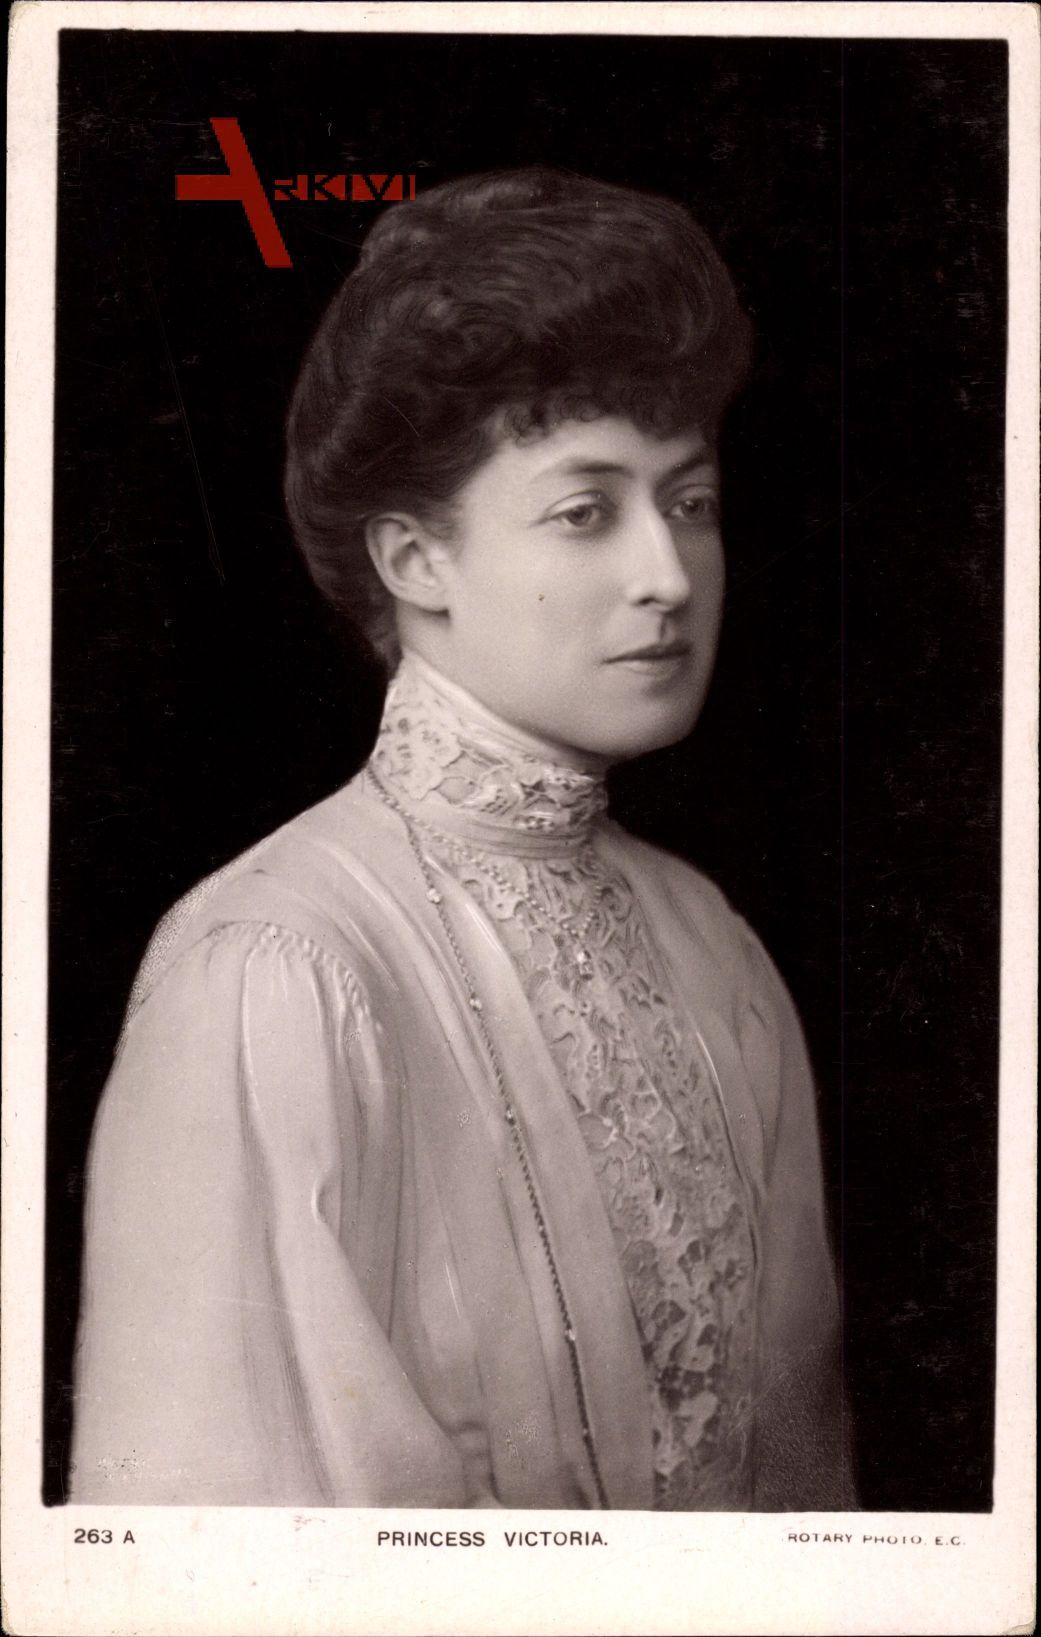 Princess Victoria, a daughter of King Edward VII